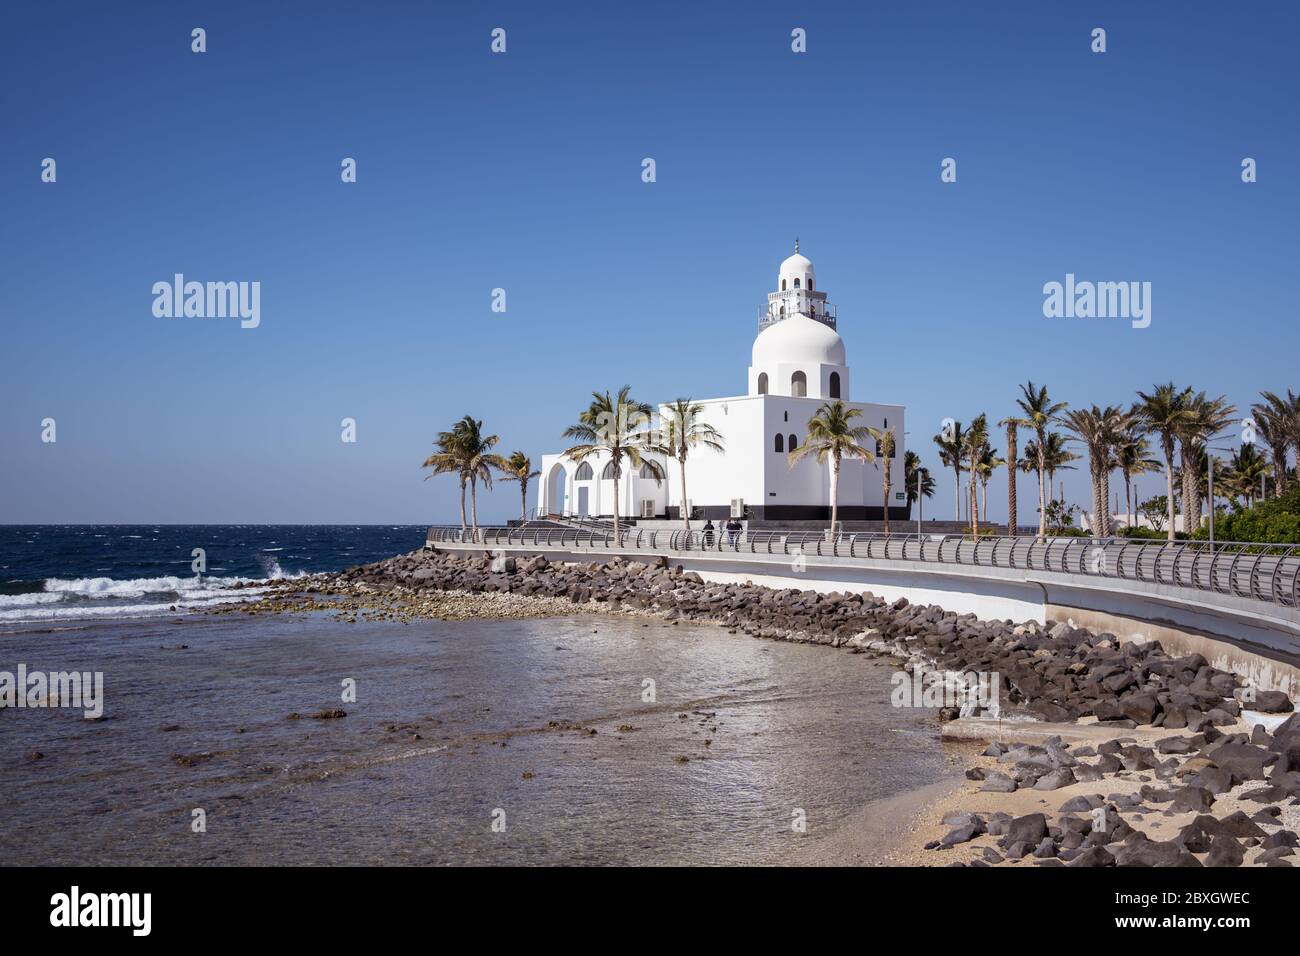 Jeddah / Saudi Arabia - January 20, 2020: Beautiful Mosque with palm trees near the sea Stock Photo